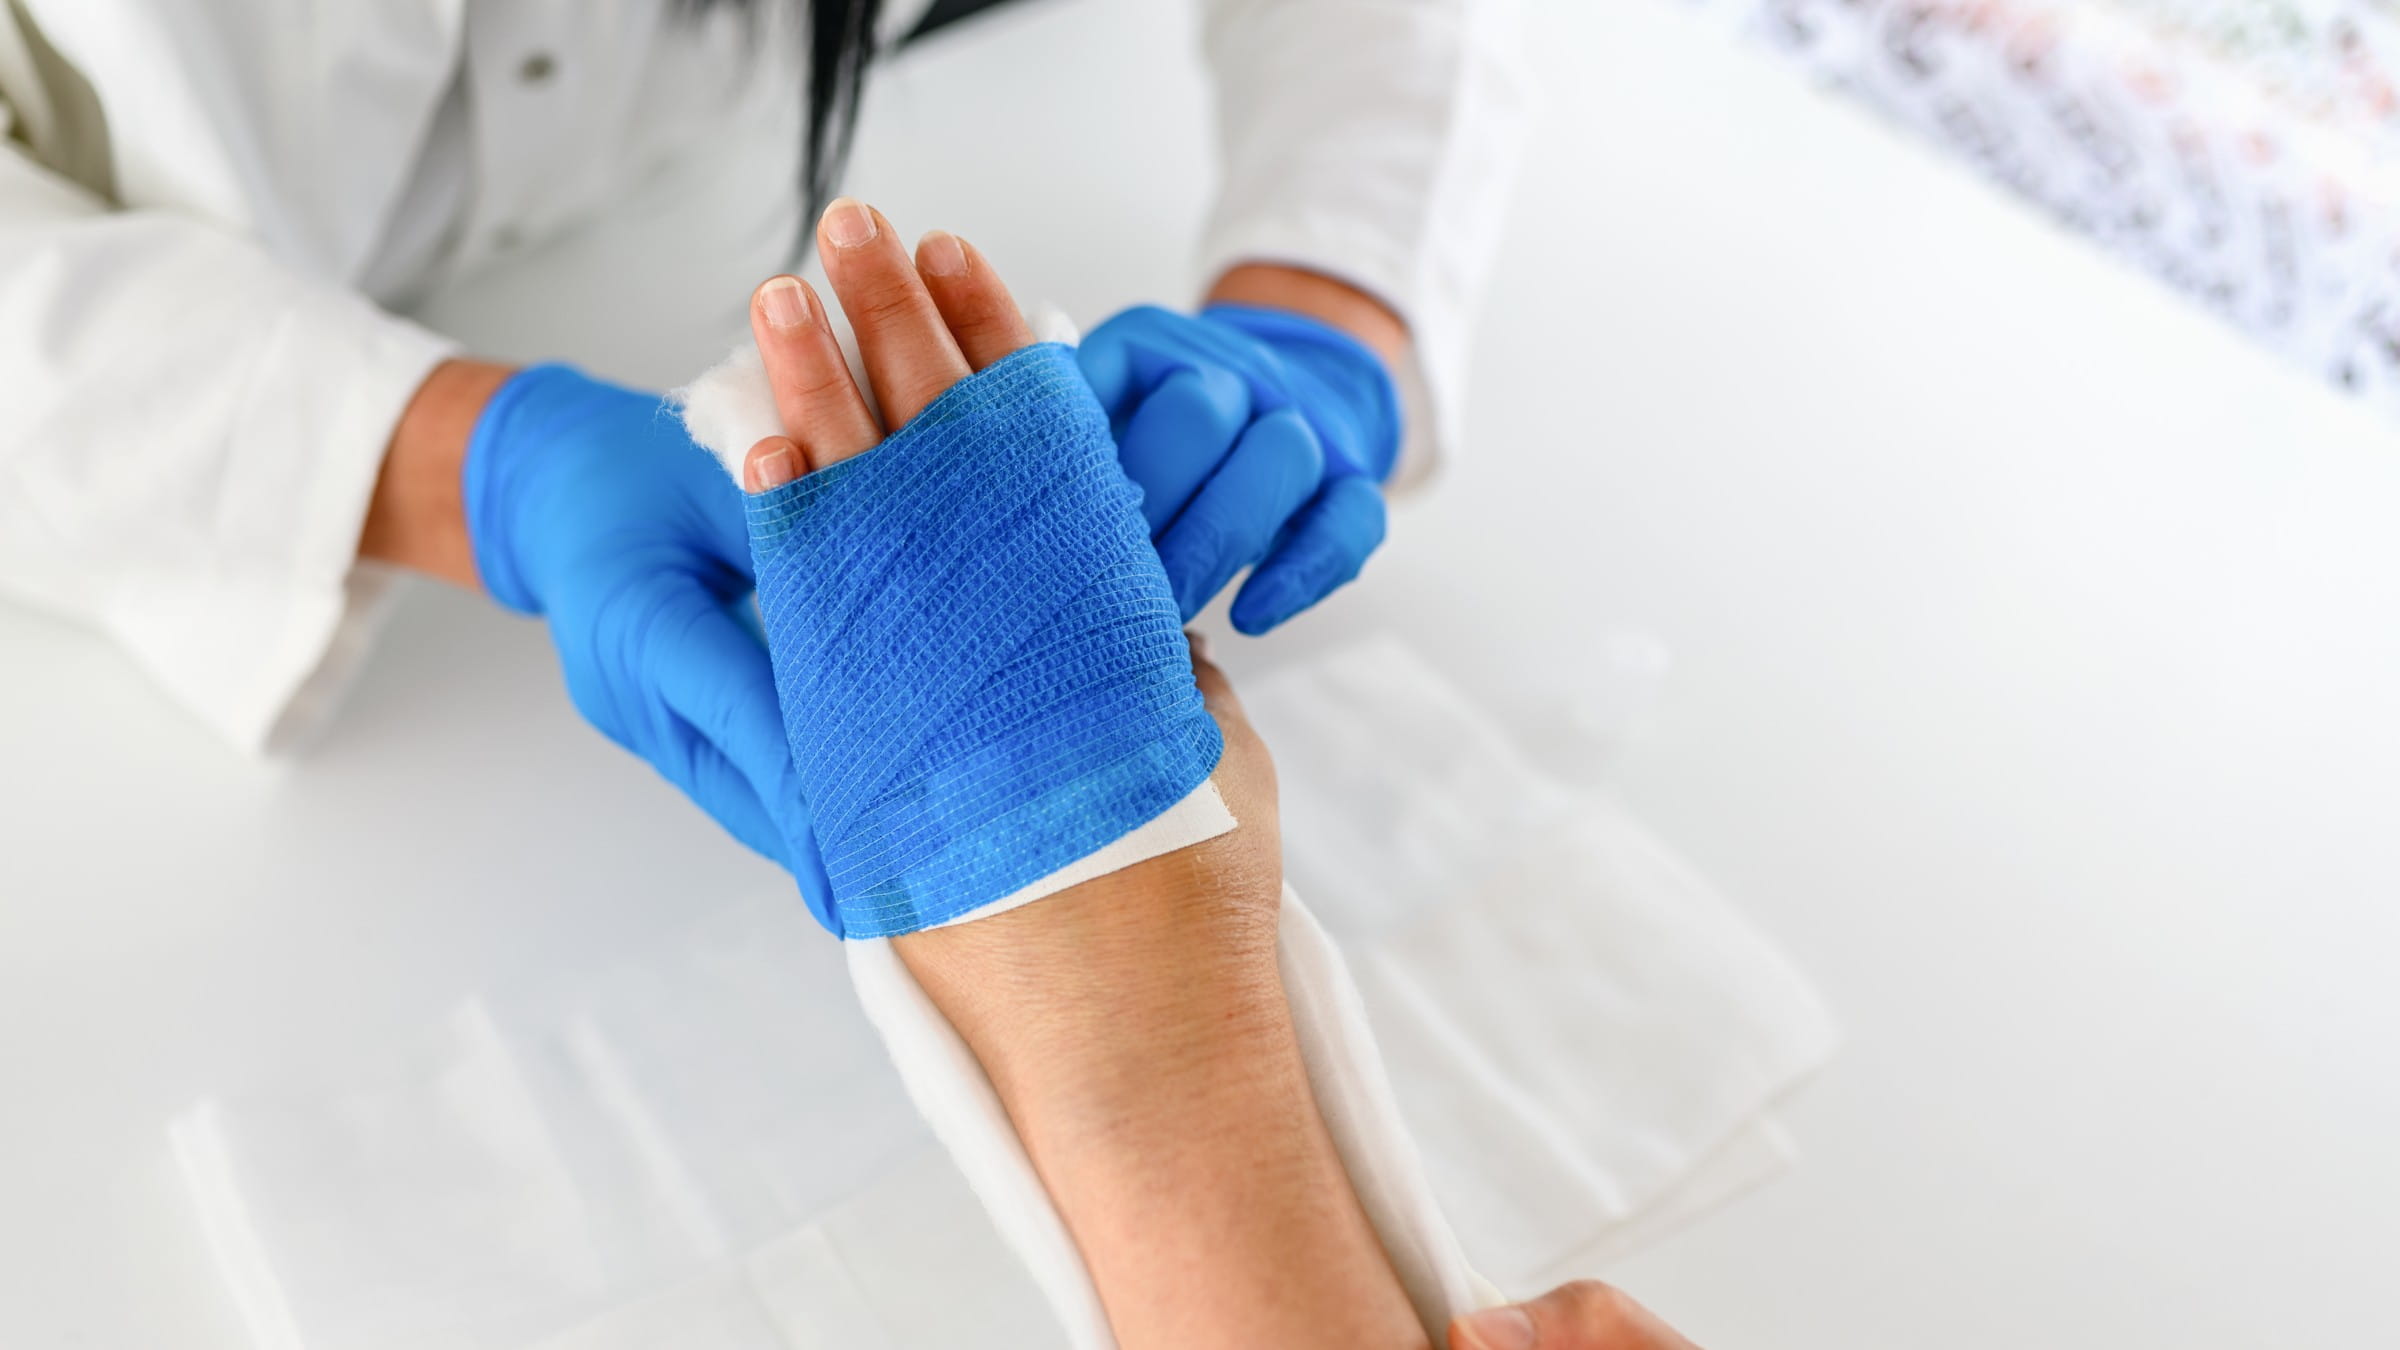 Doctor bandaging a patient's arm